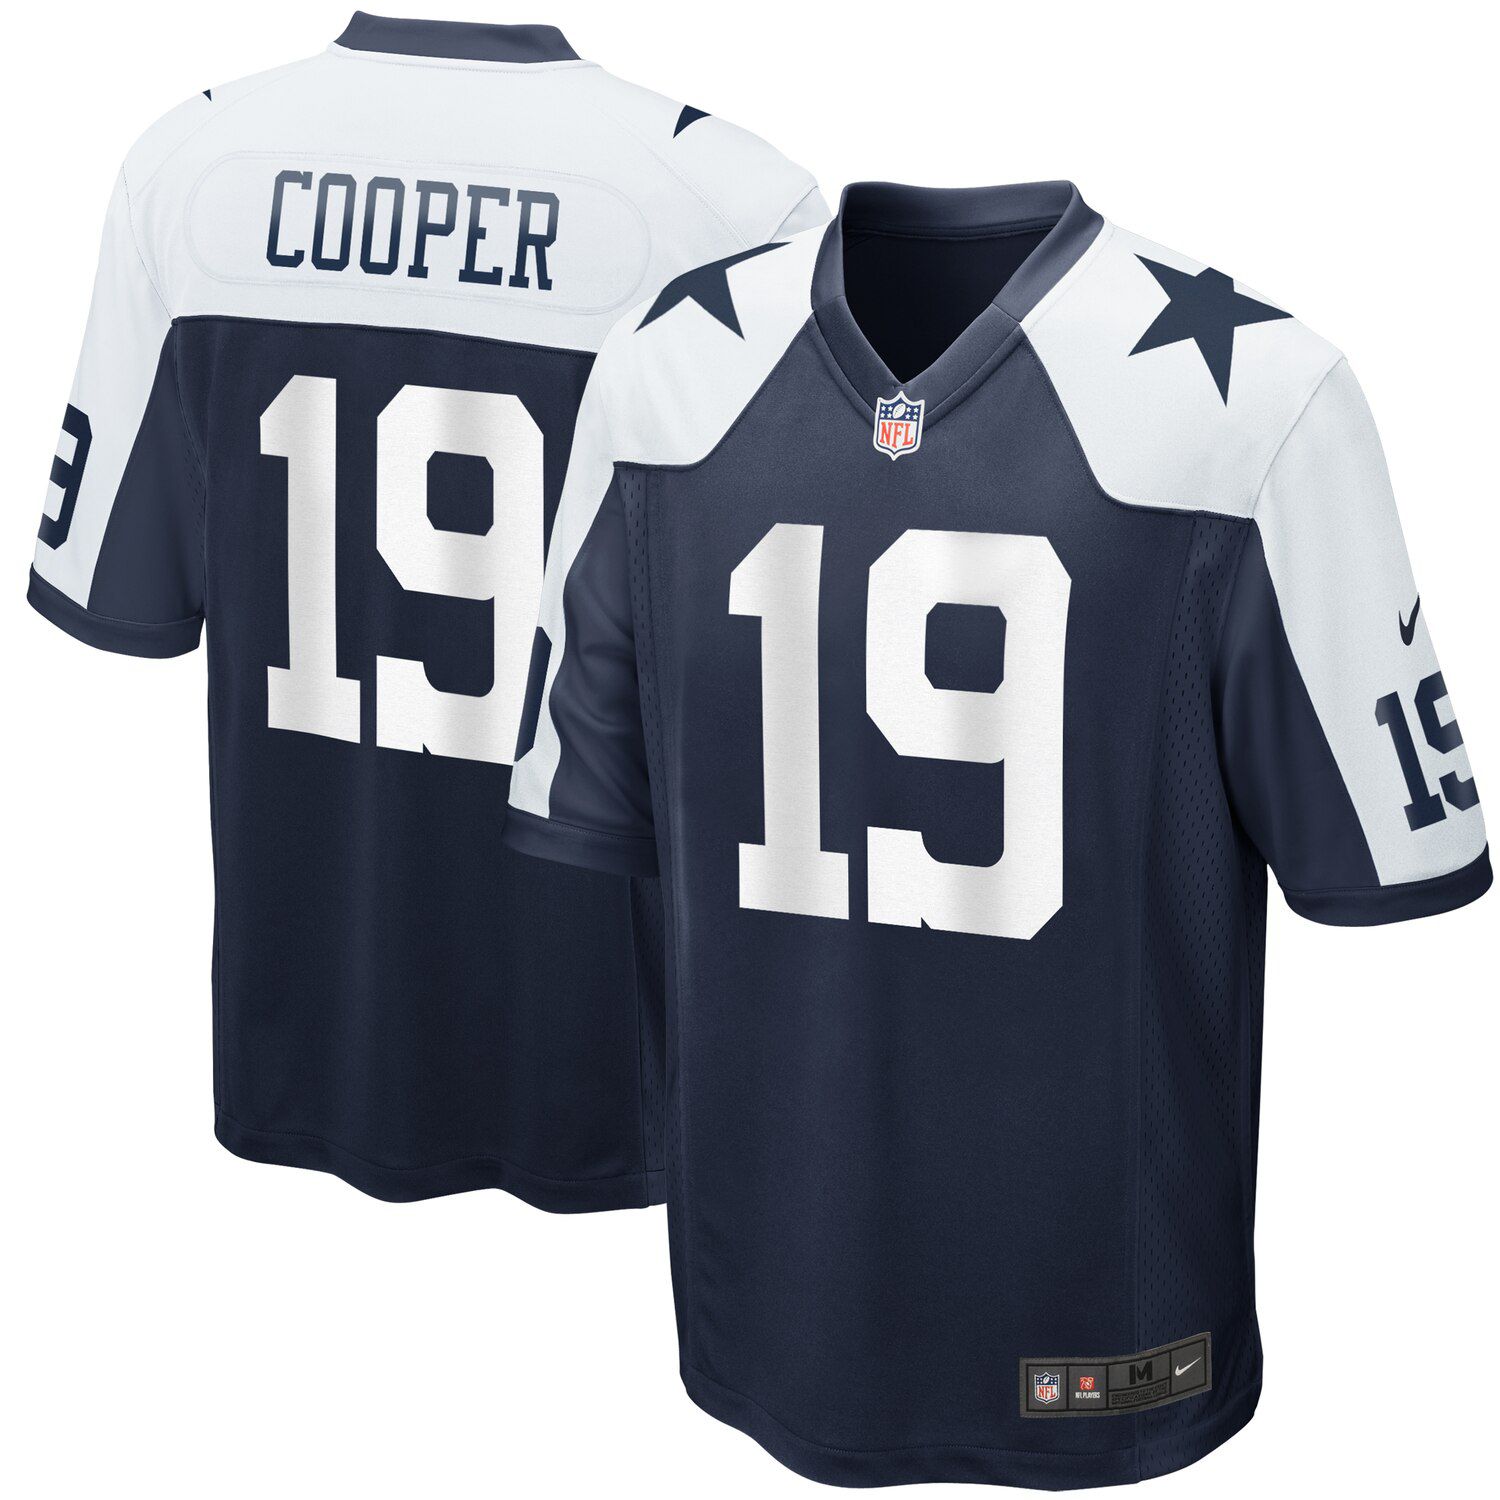 cooper cowboys jersey